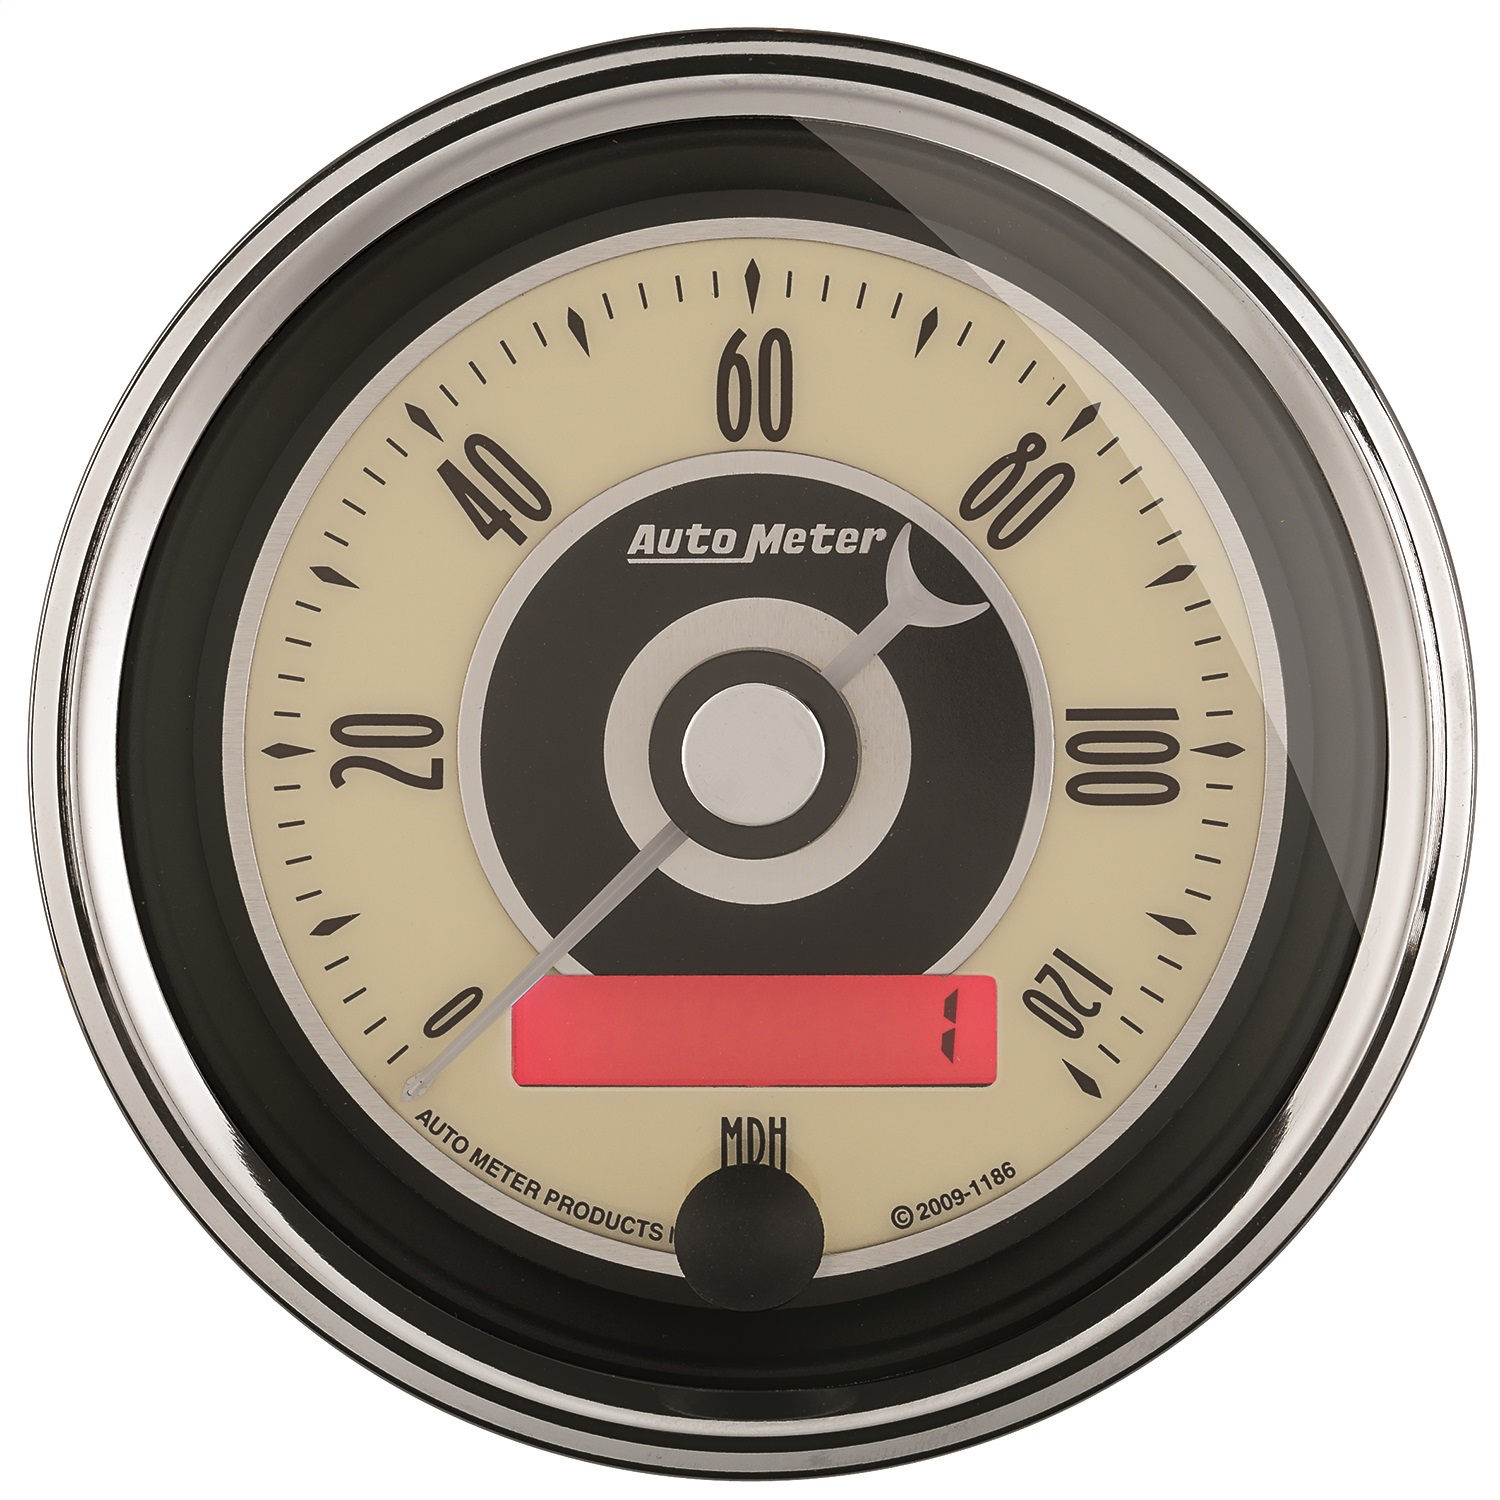 Auto Meter Auto Meter 1187 Cruiser AD; Electric Programmable Speedometer